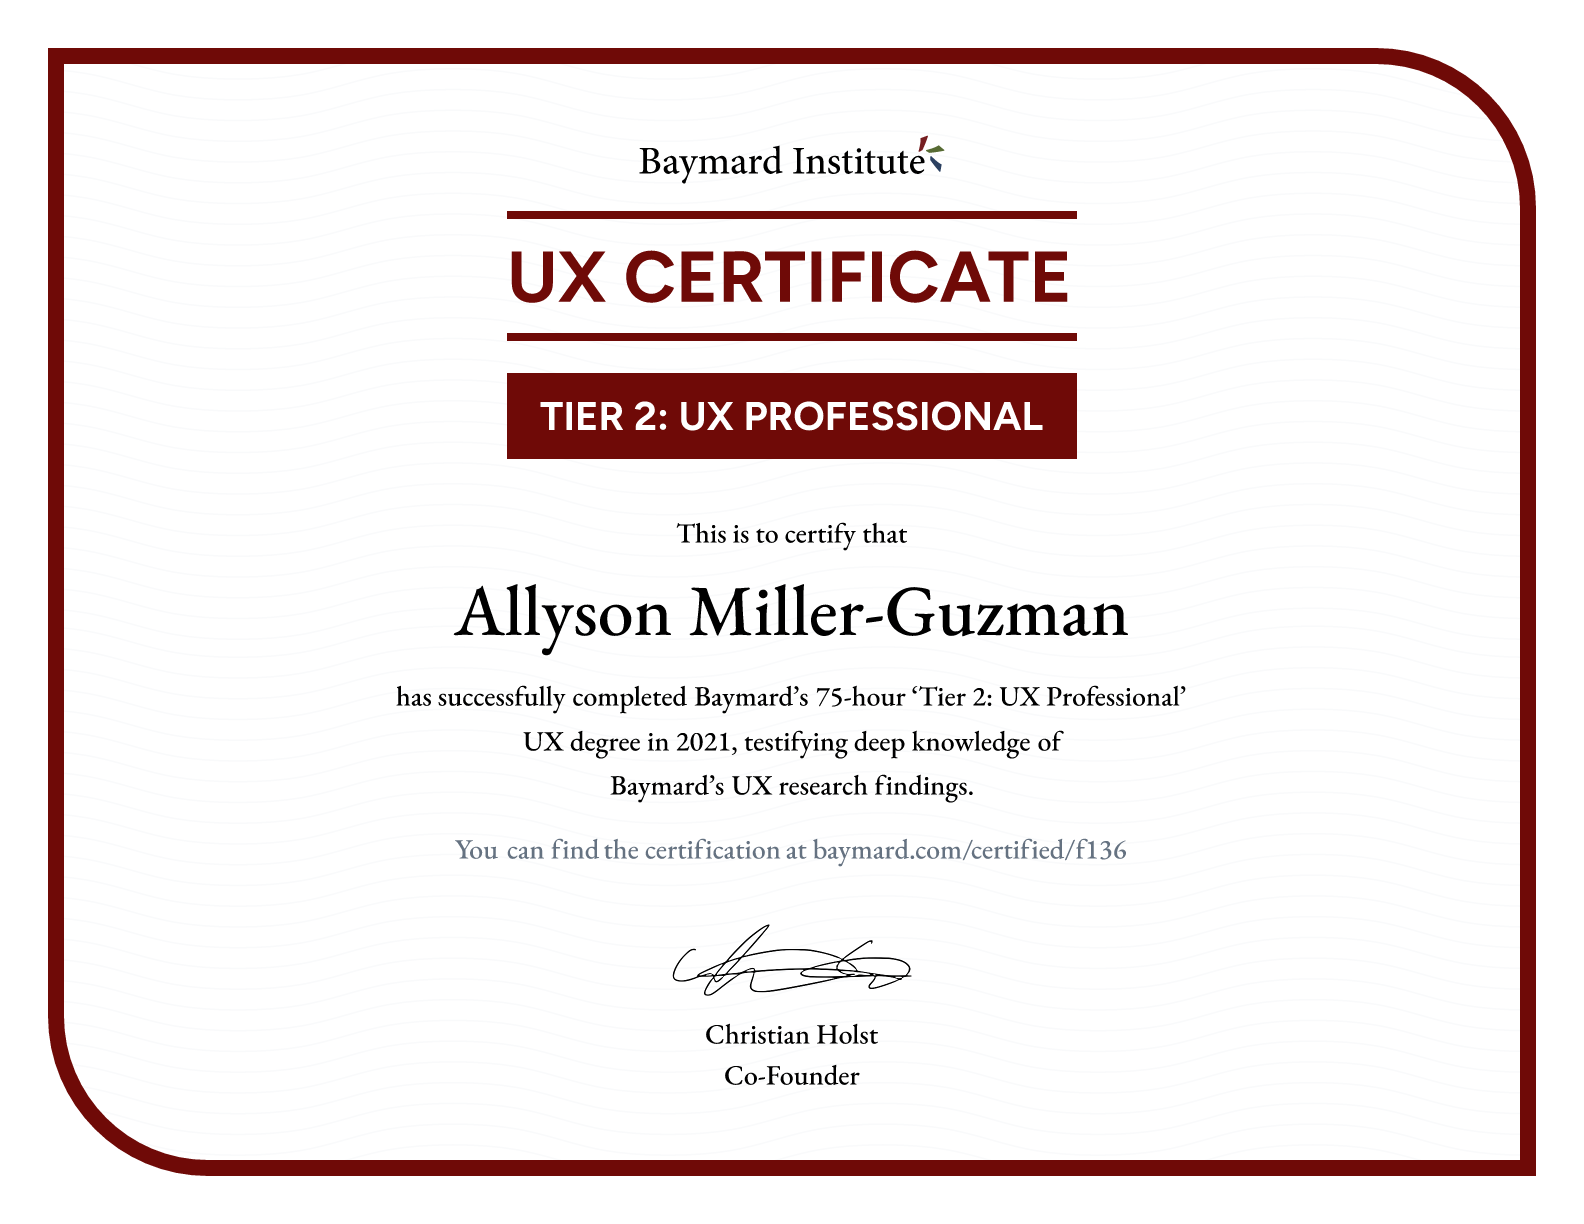 Allyson Miller-Guzman’s certificate